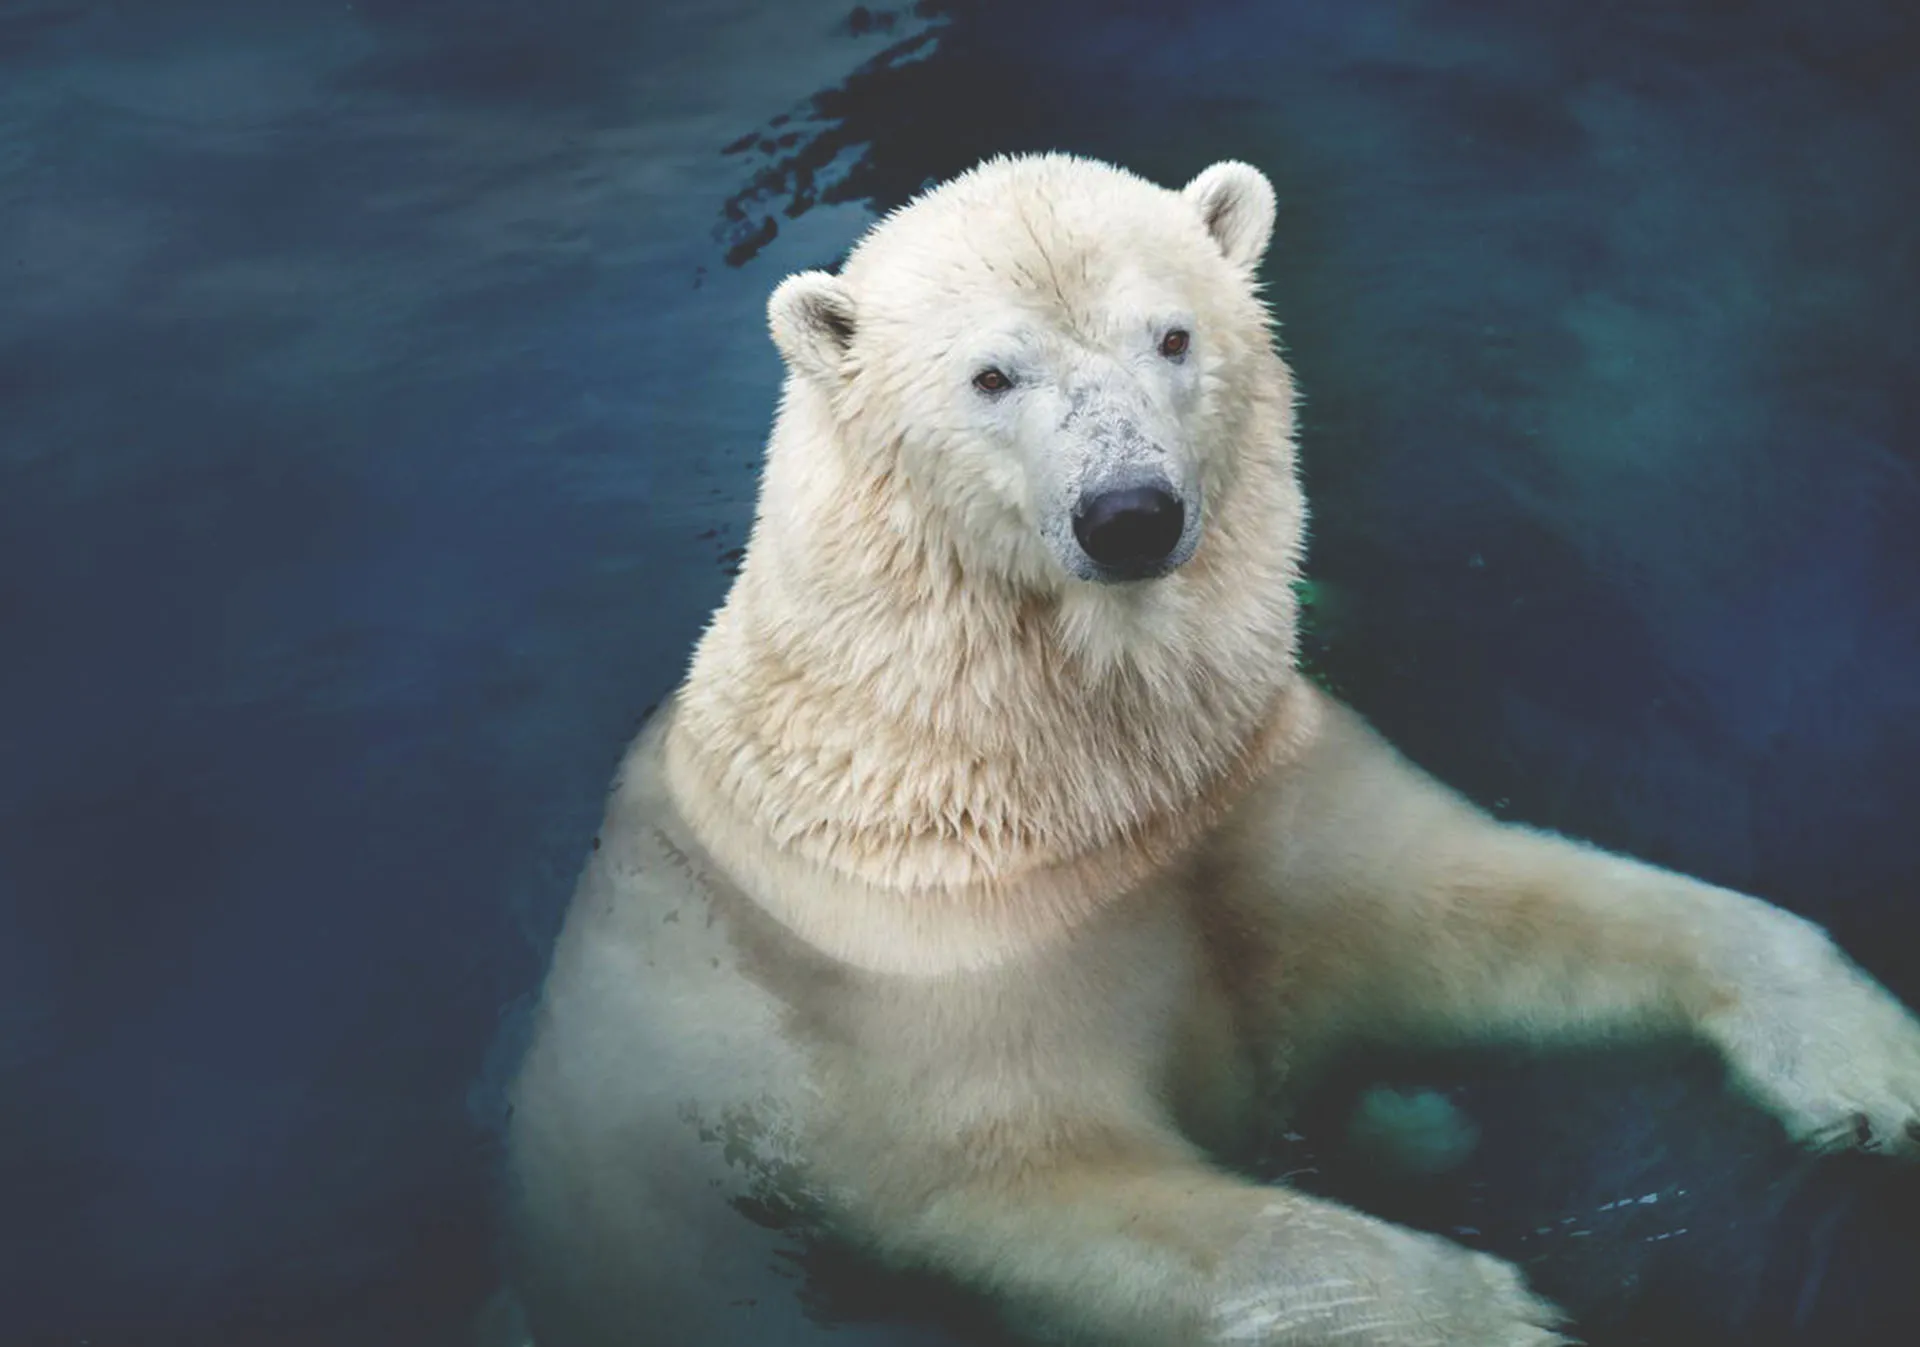 Polar bear 'Siku' relaxes in his wading pool